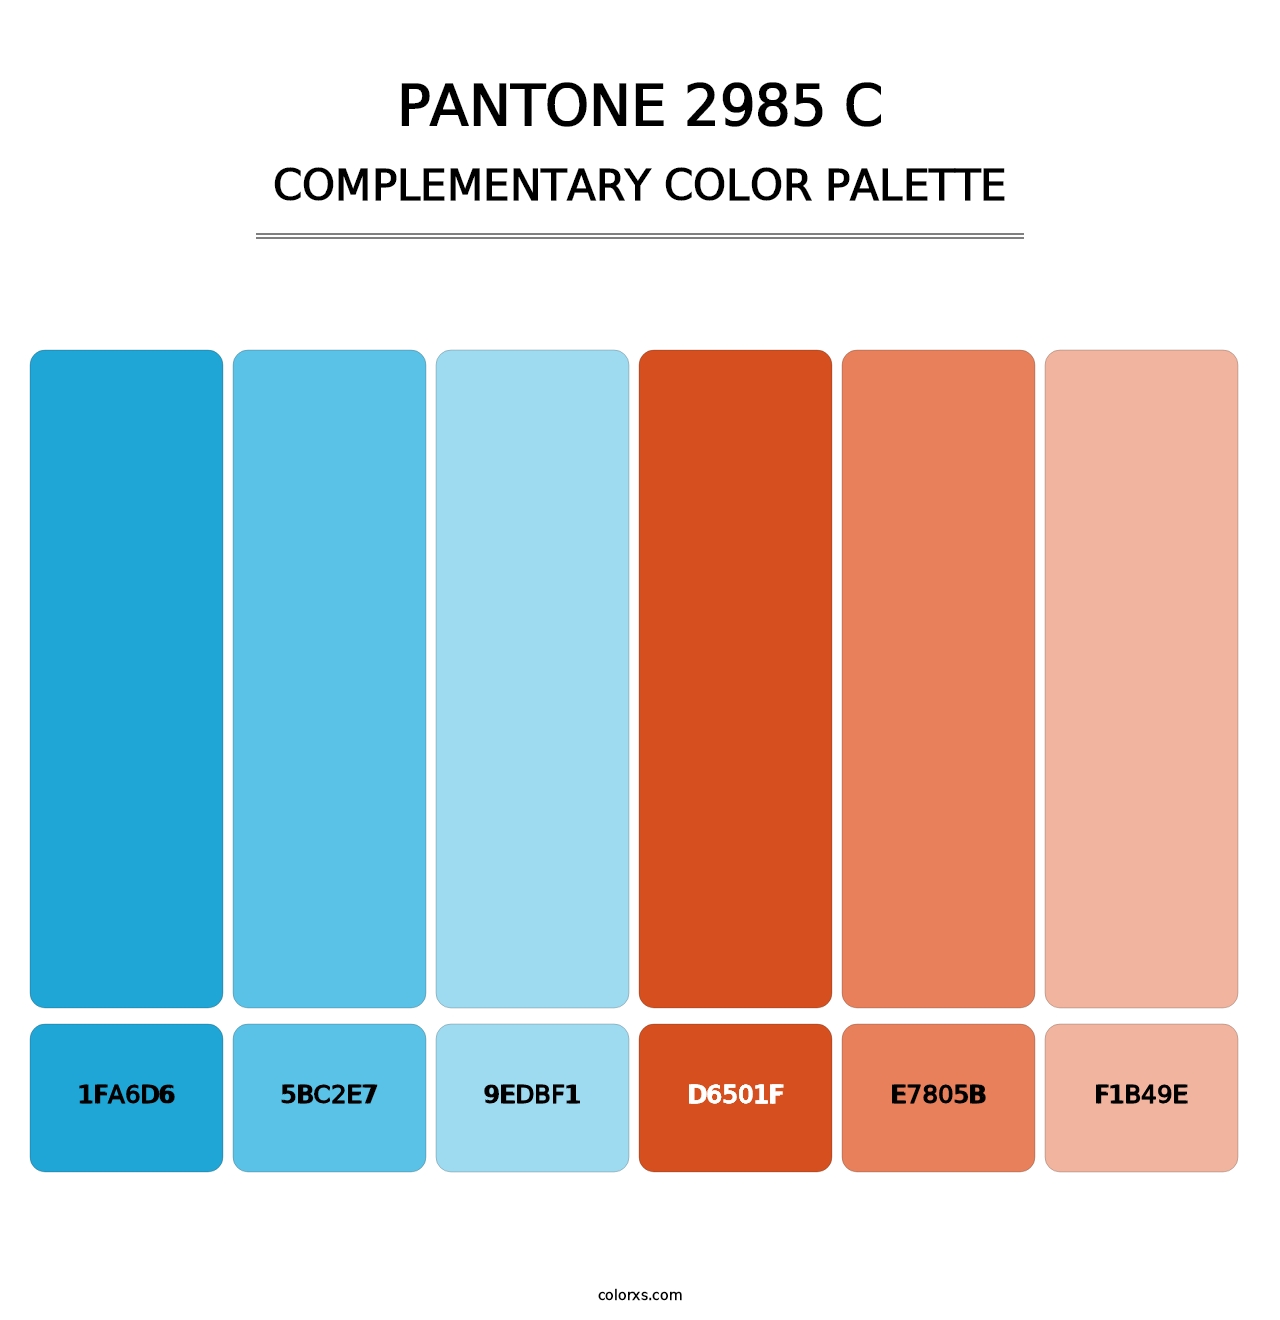 PANTONE 2985 C - Complementary Color Palette